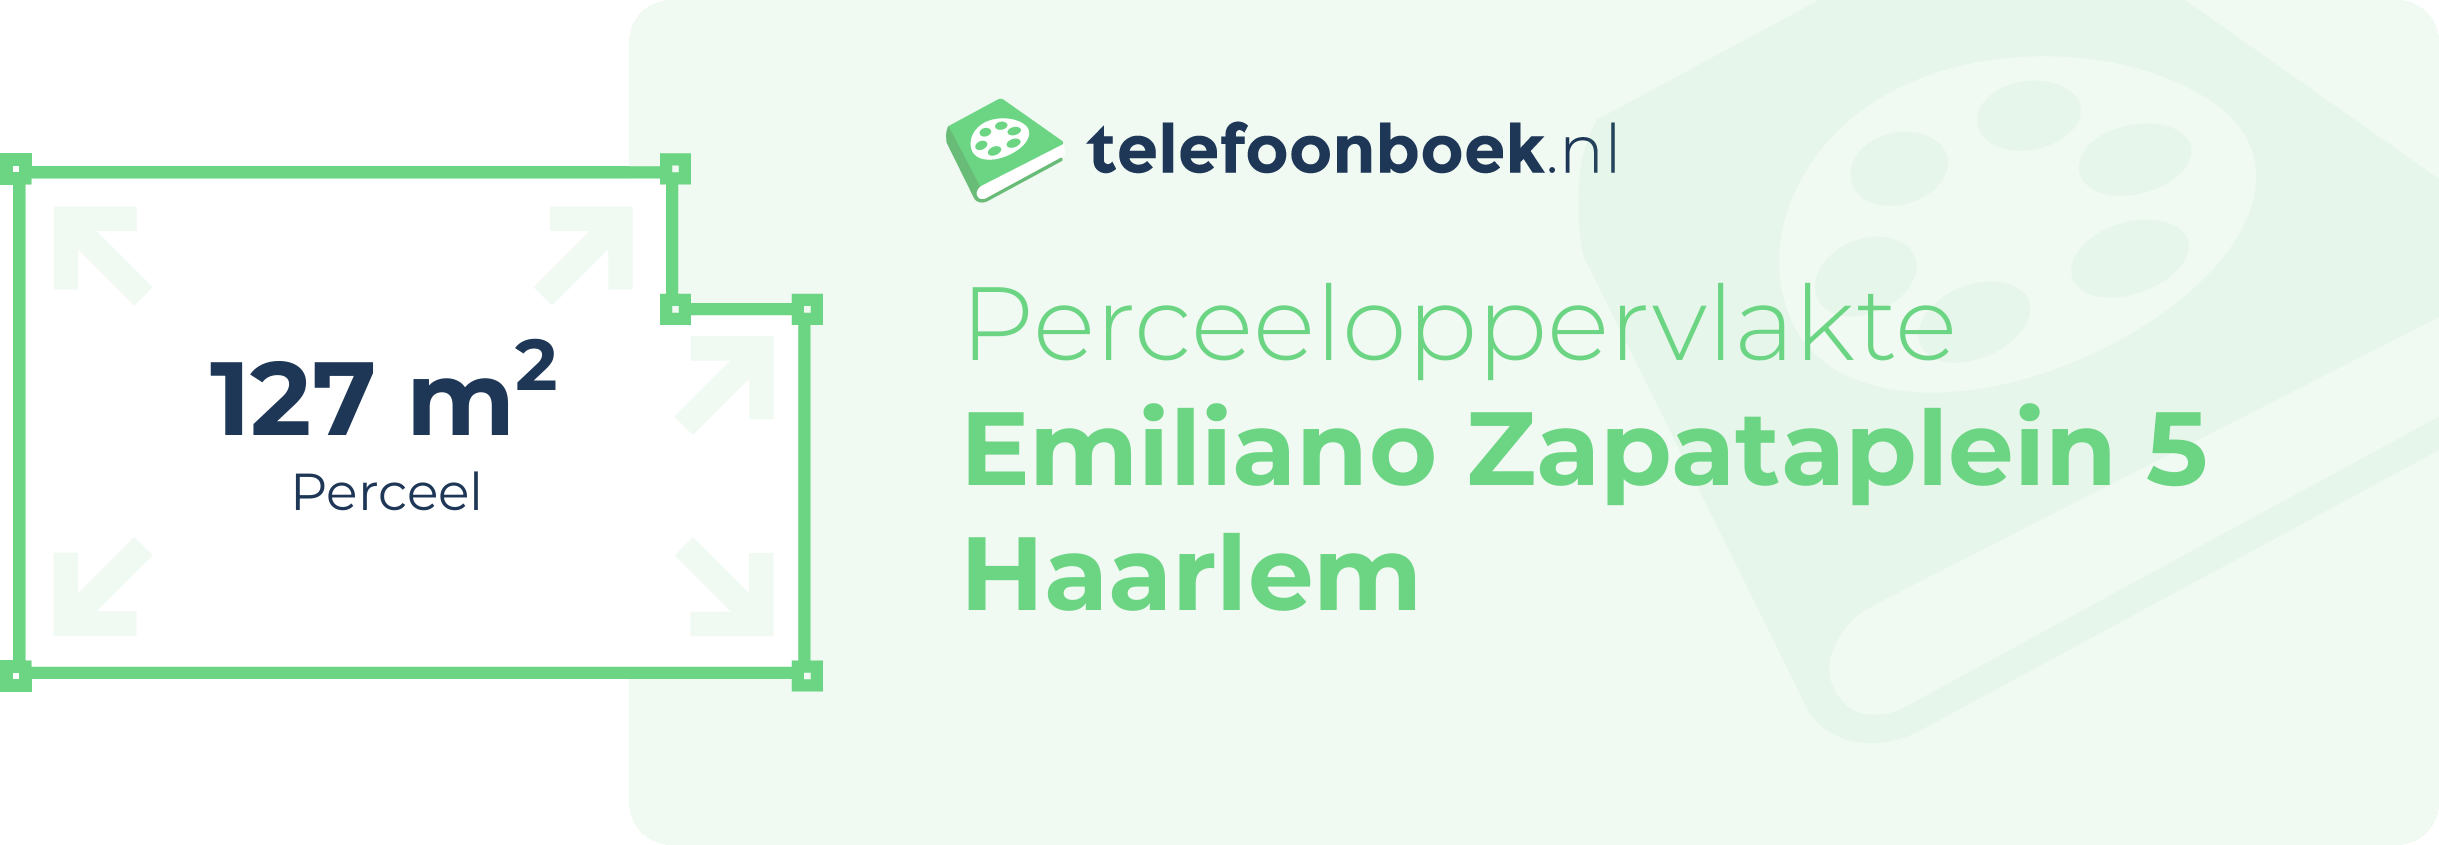 Perceeloppervlakte Emiliano Zapataplein 5 Haarlem